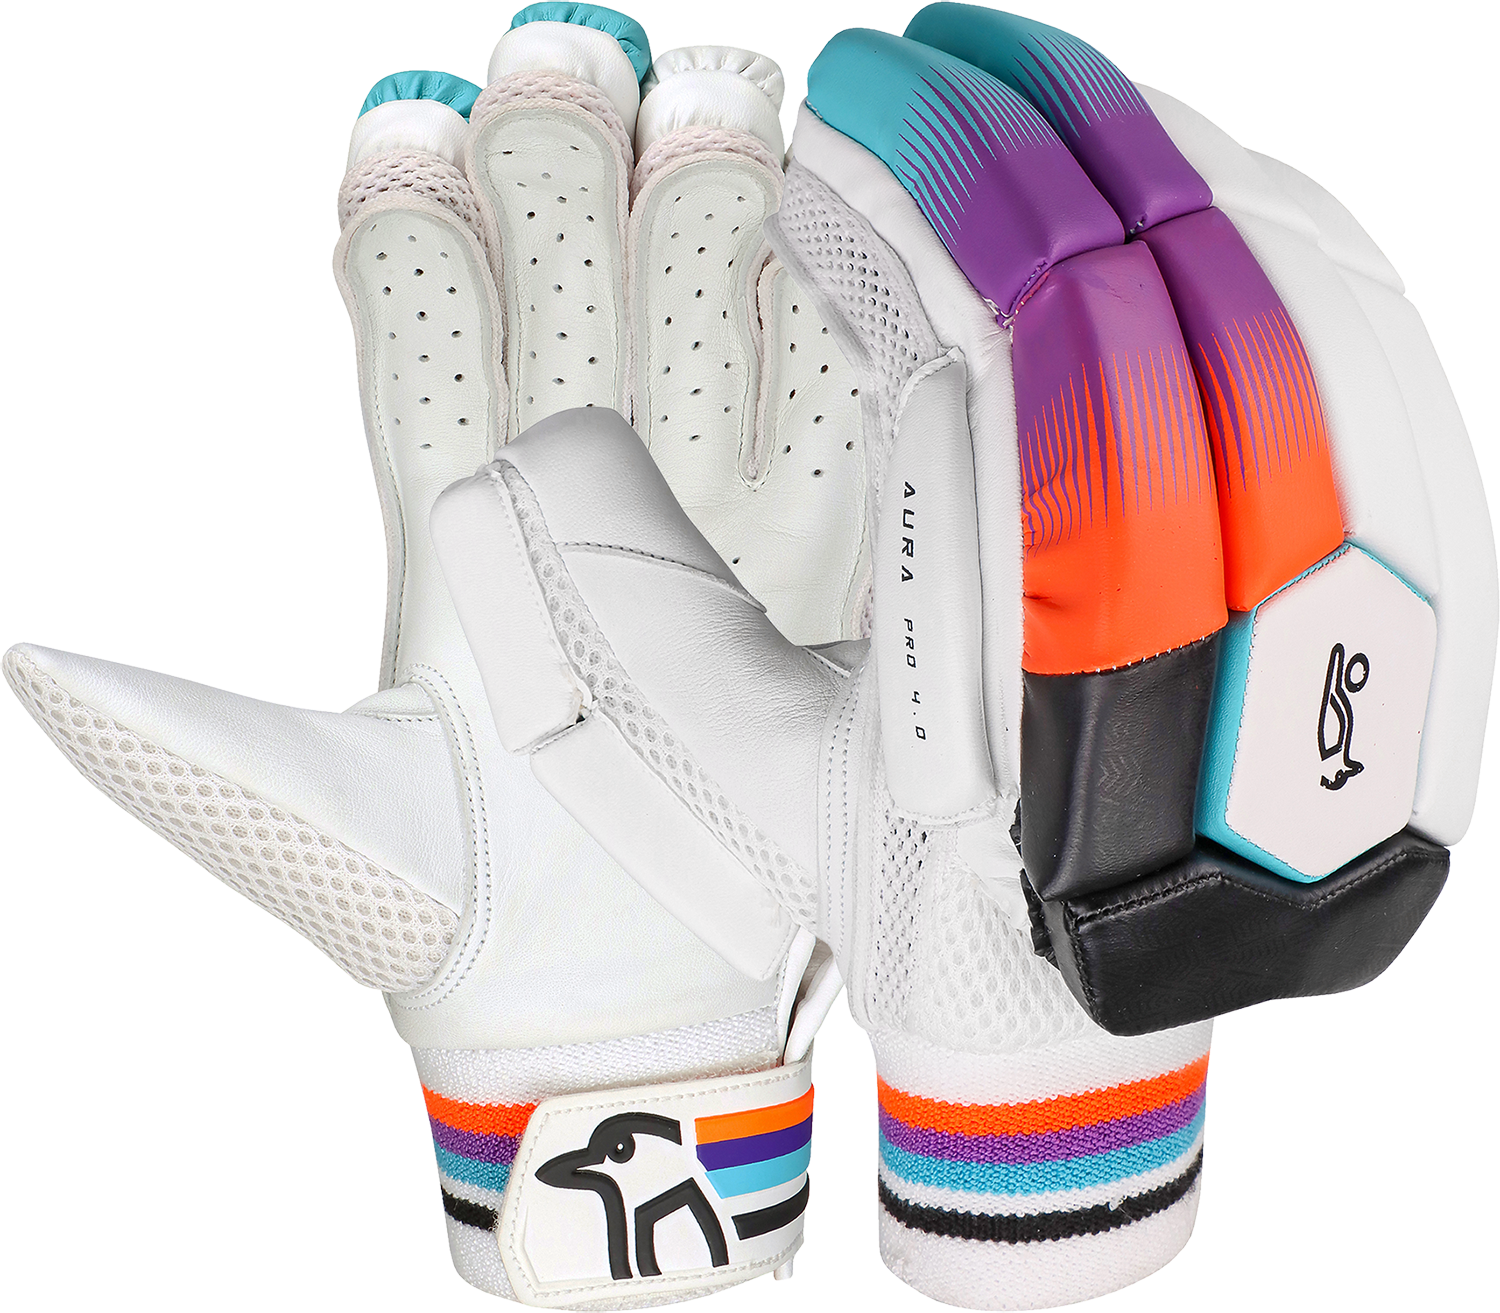 Kookaburra-Aura-Pro-4.0-Batting-Gloves